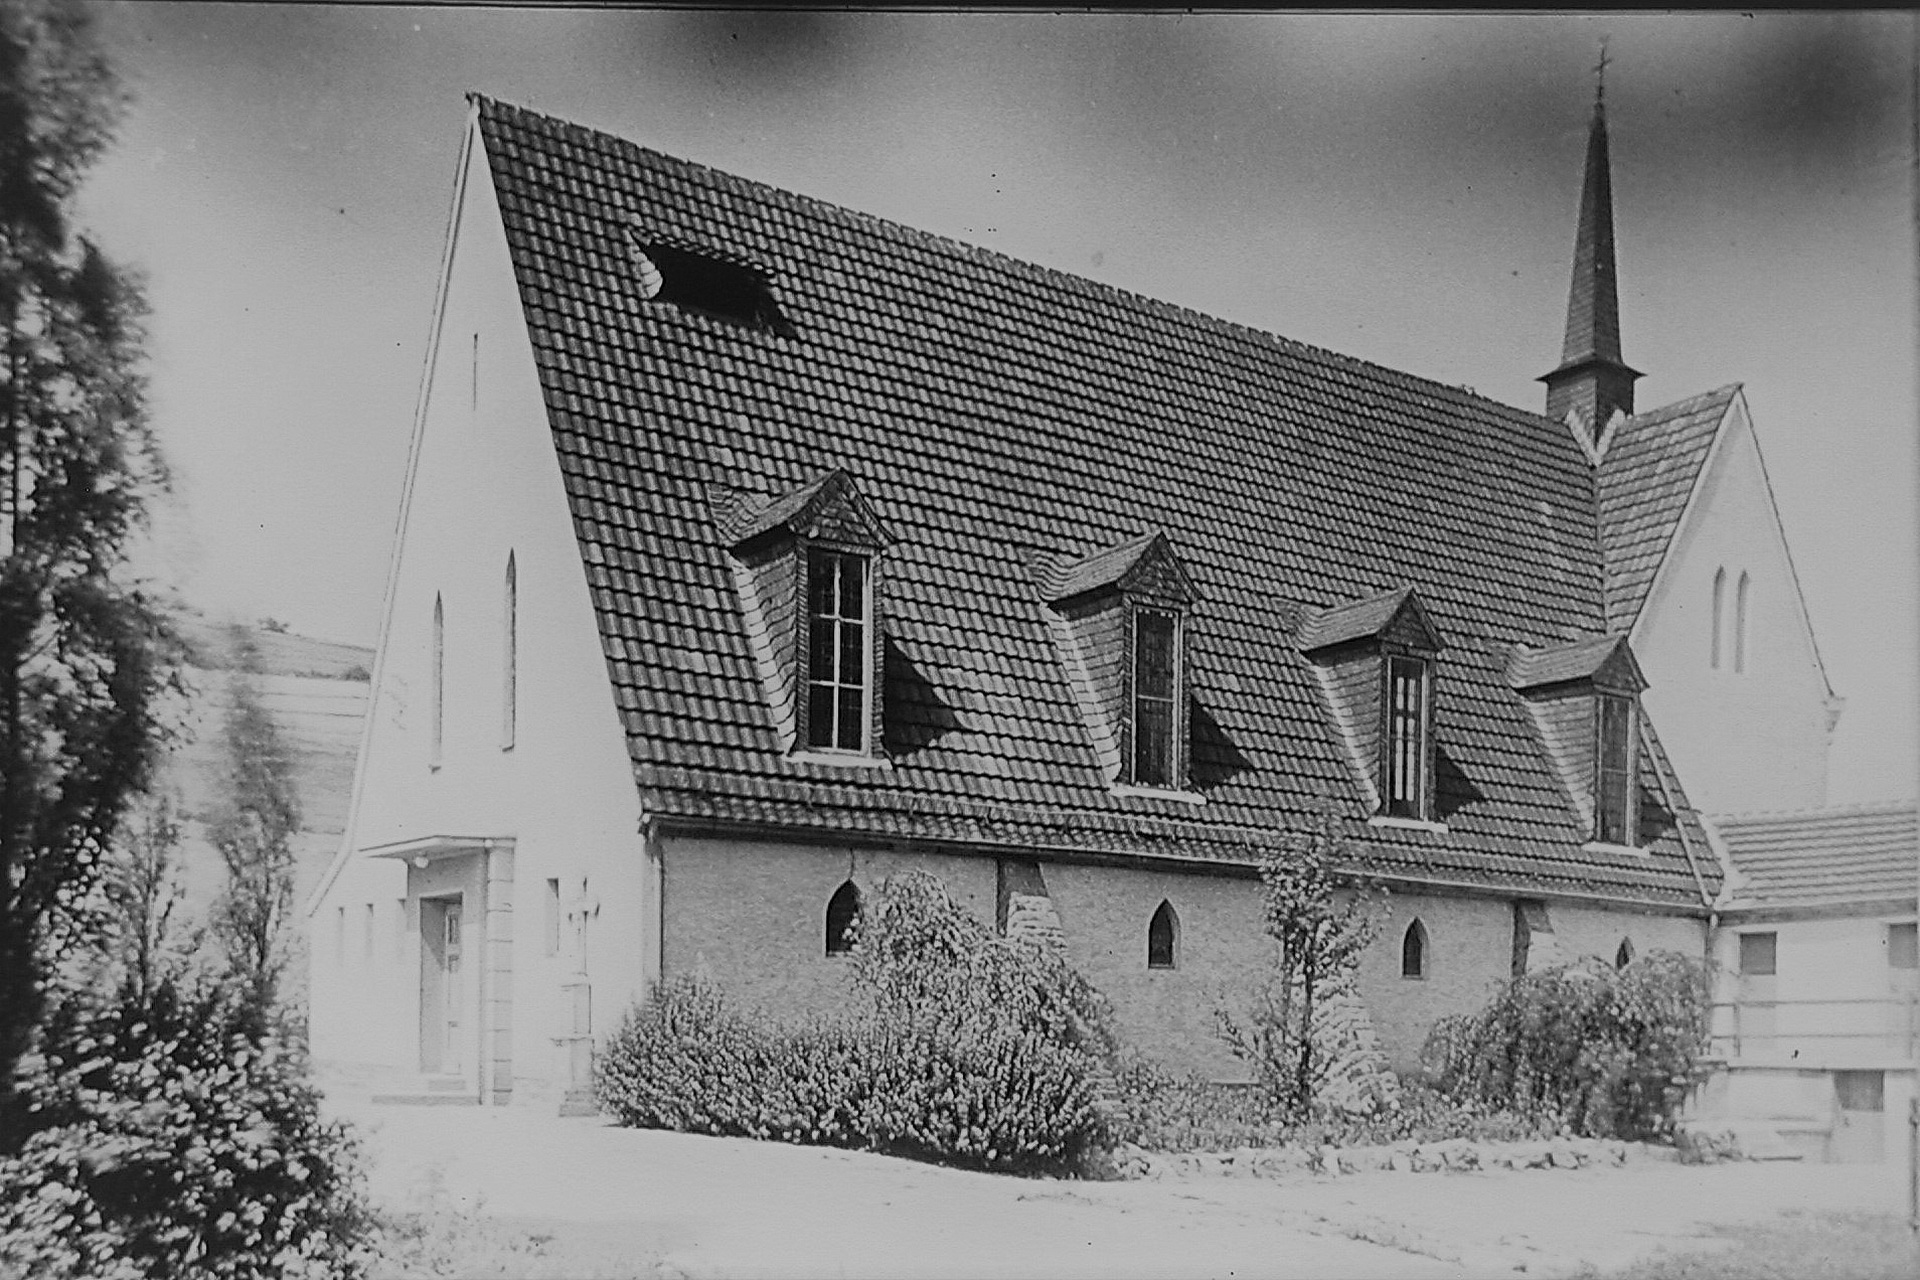 St. Margareta damals…. (c) Foto: Archiv Helmut Mehren/pp/Agentur ProfiPress